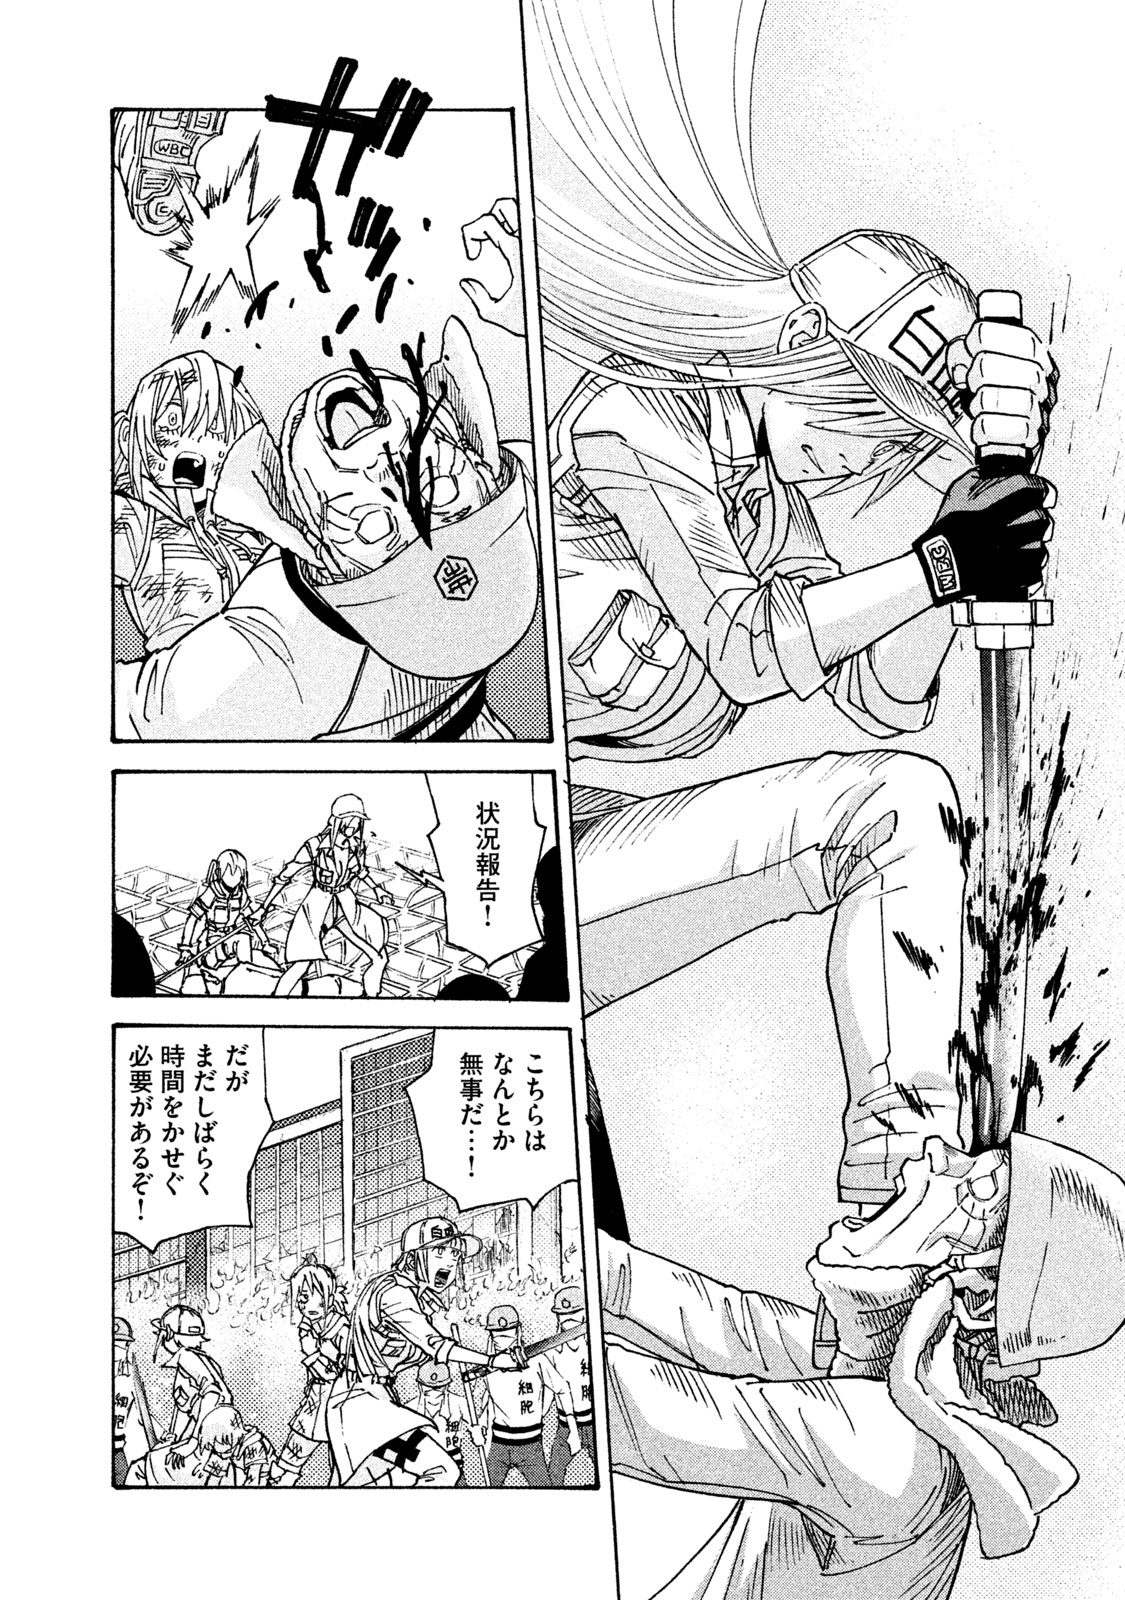 Hataraku Saibou BLACK - Chapter 23 - Page 14